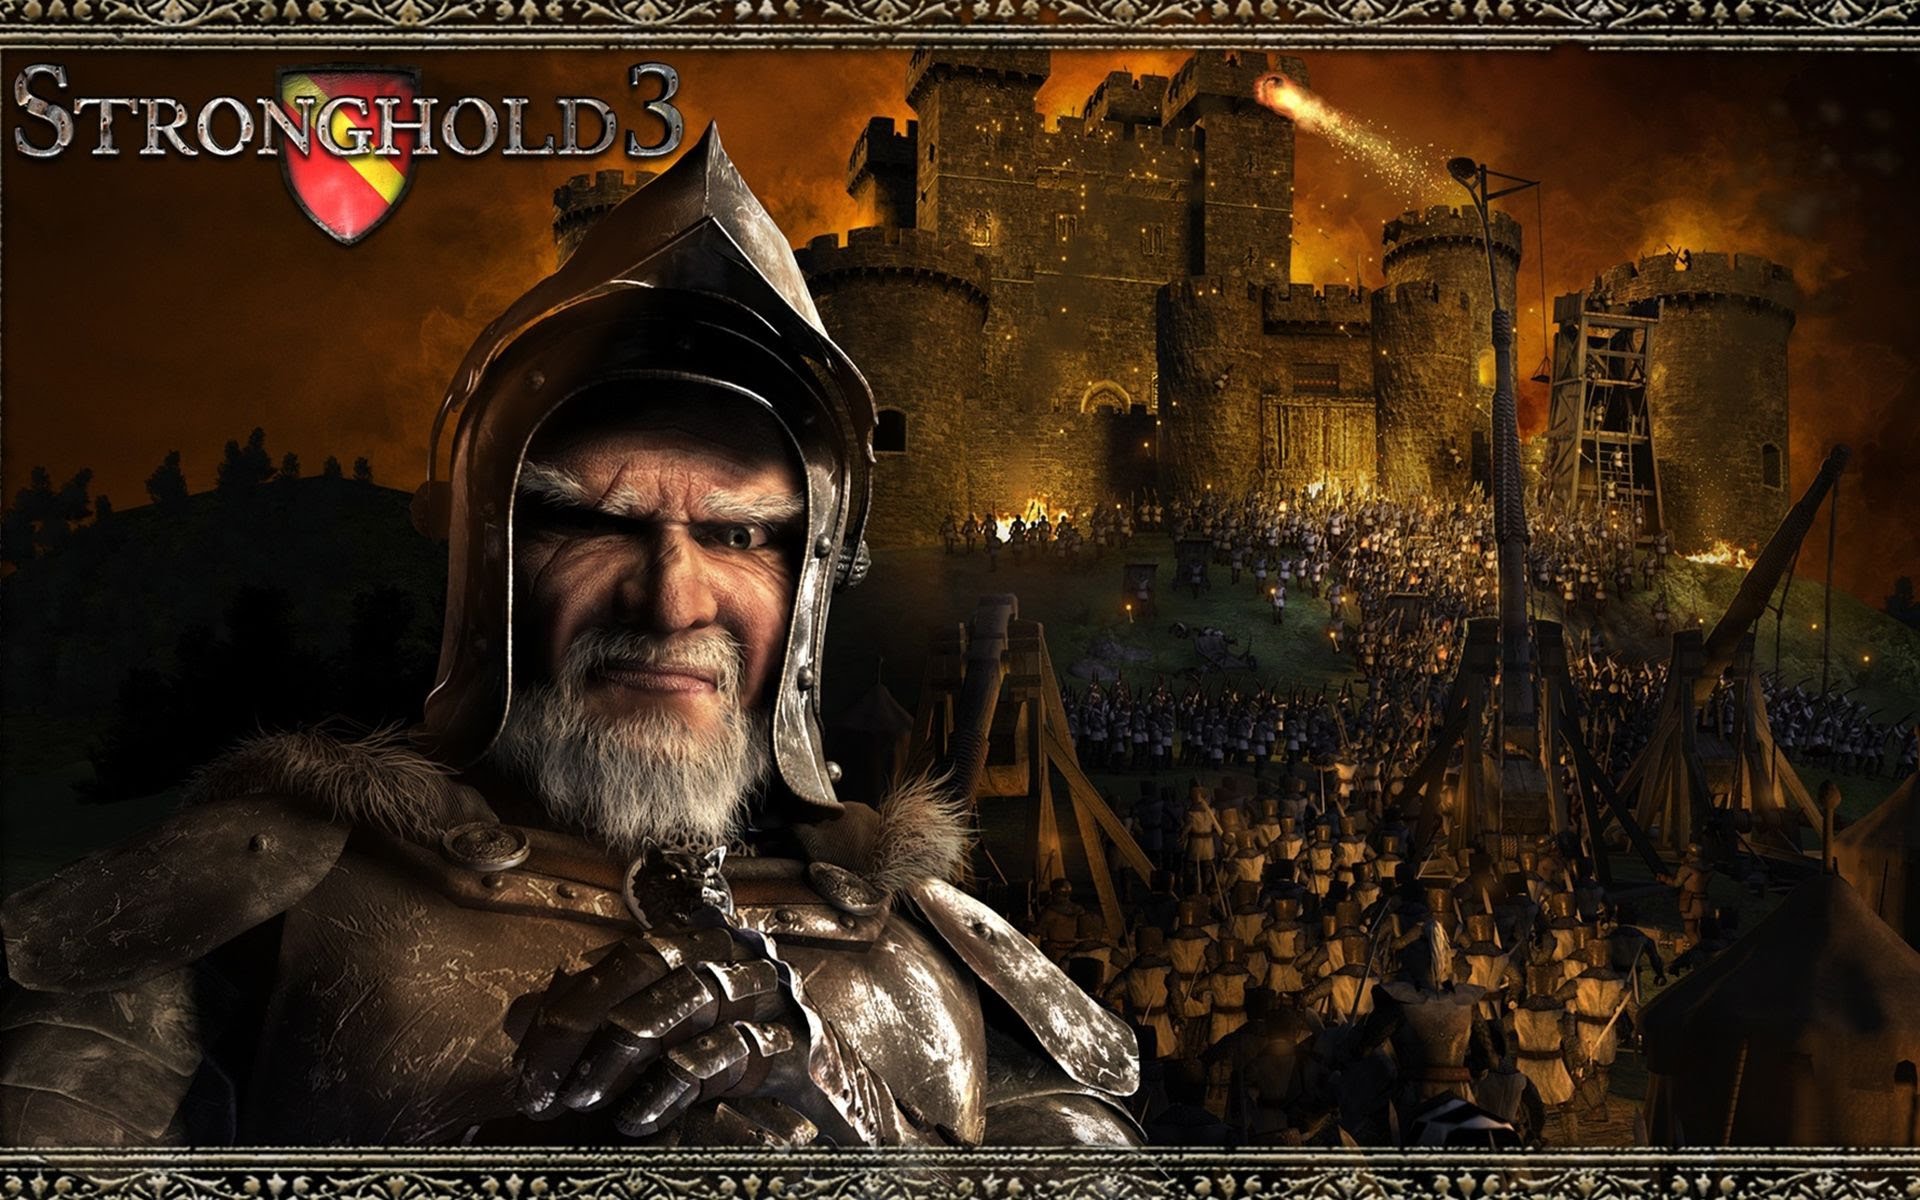 stronghold 2 full game torrent